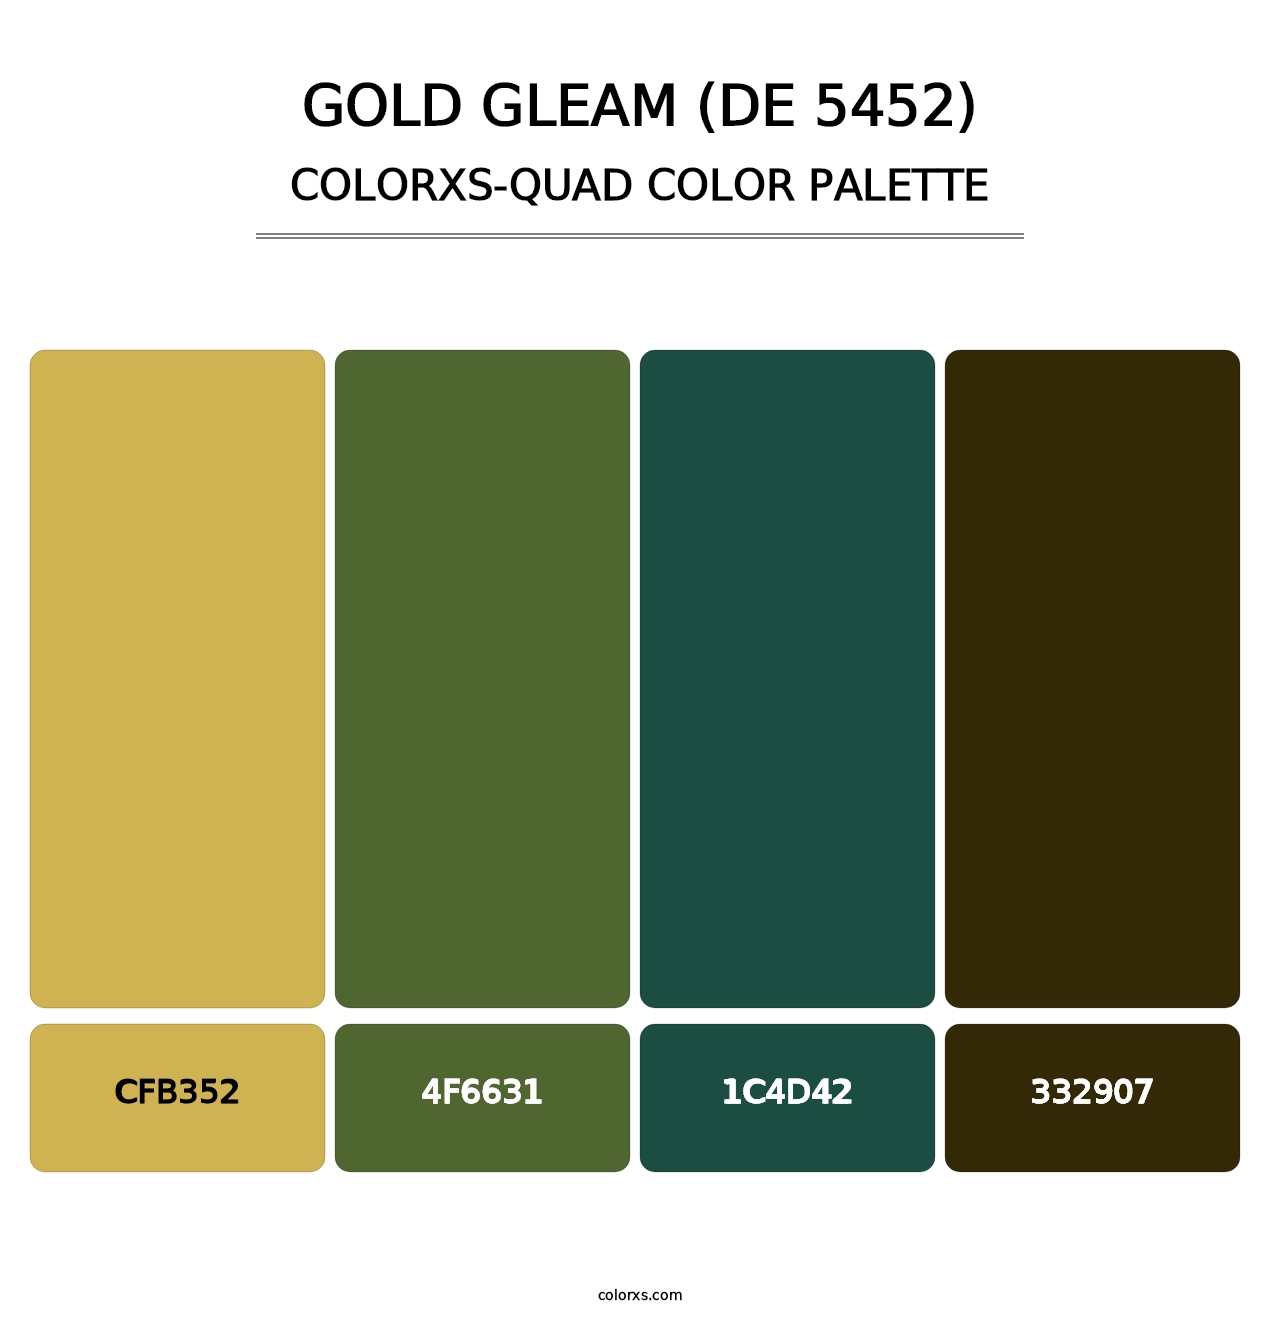 Gold Gleam (DE 5452) - Colorxs Quad Palette